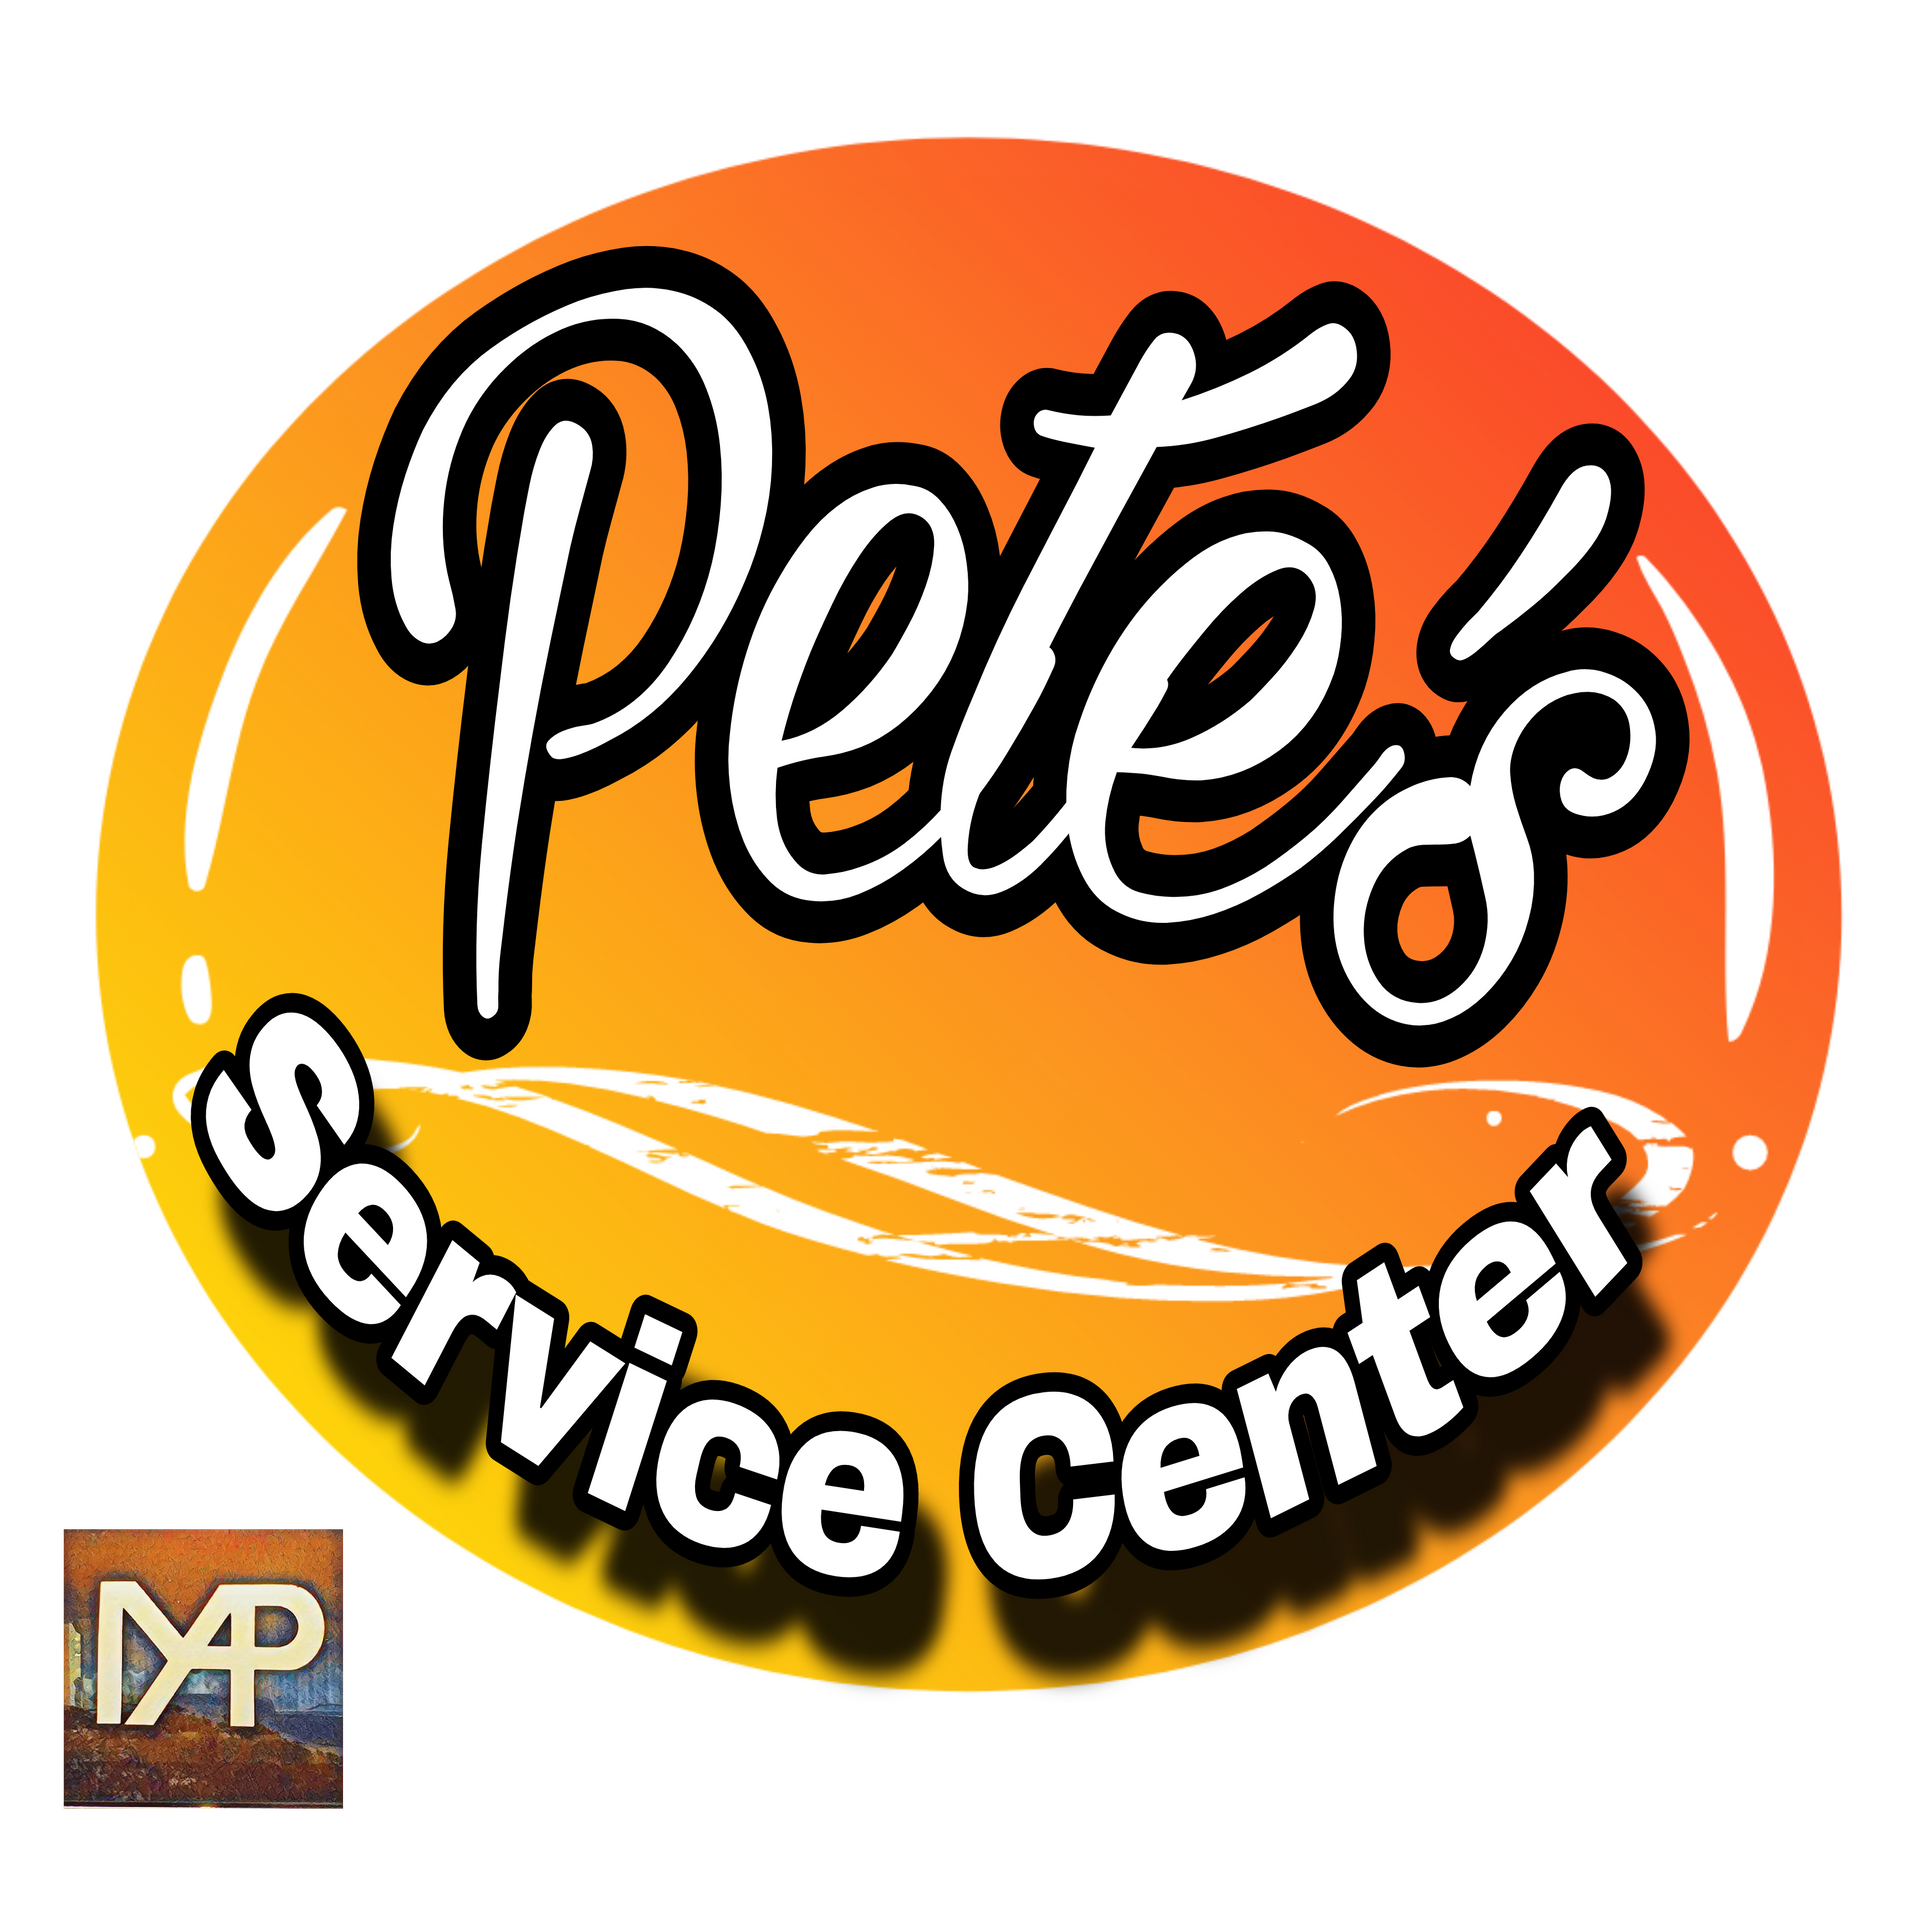 Pete's Service Center in Fairfield, TX